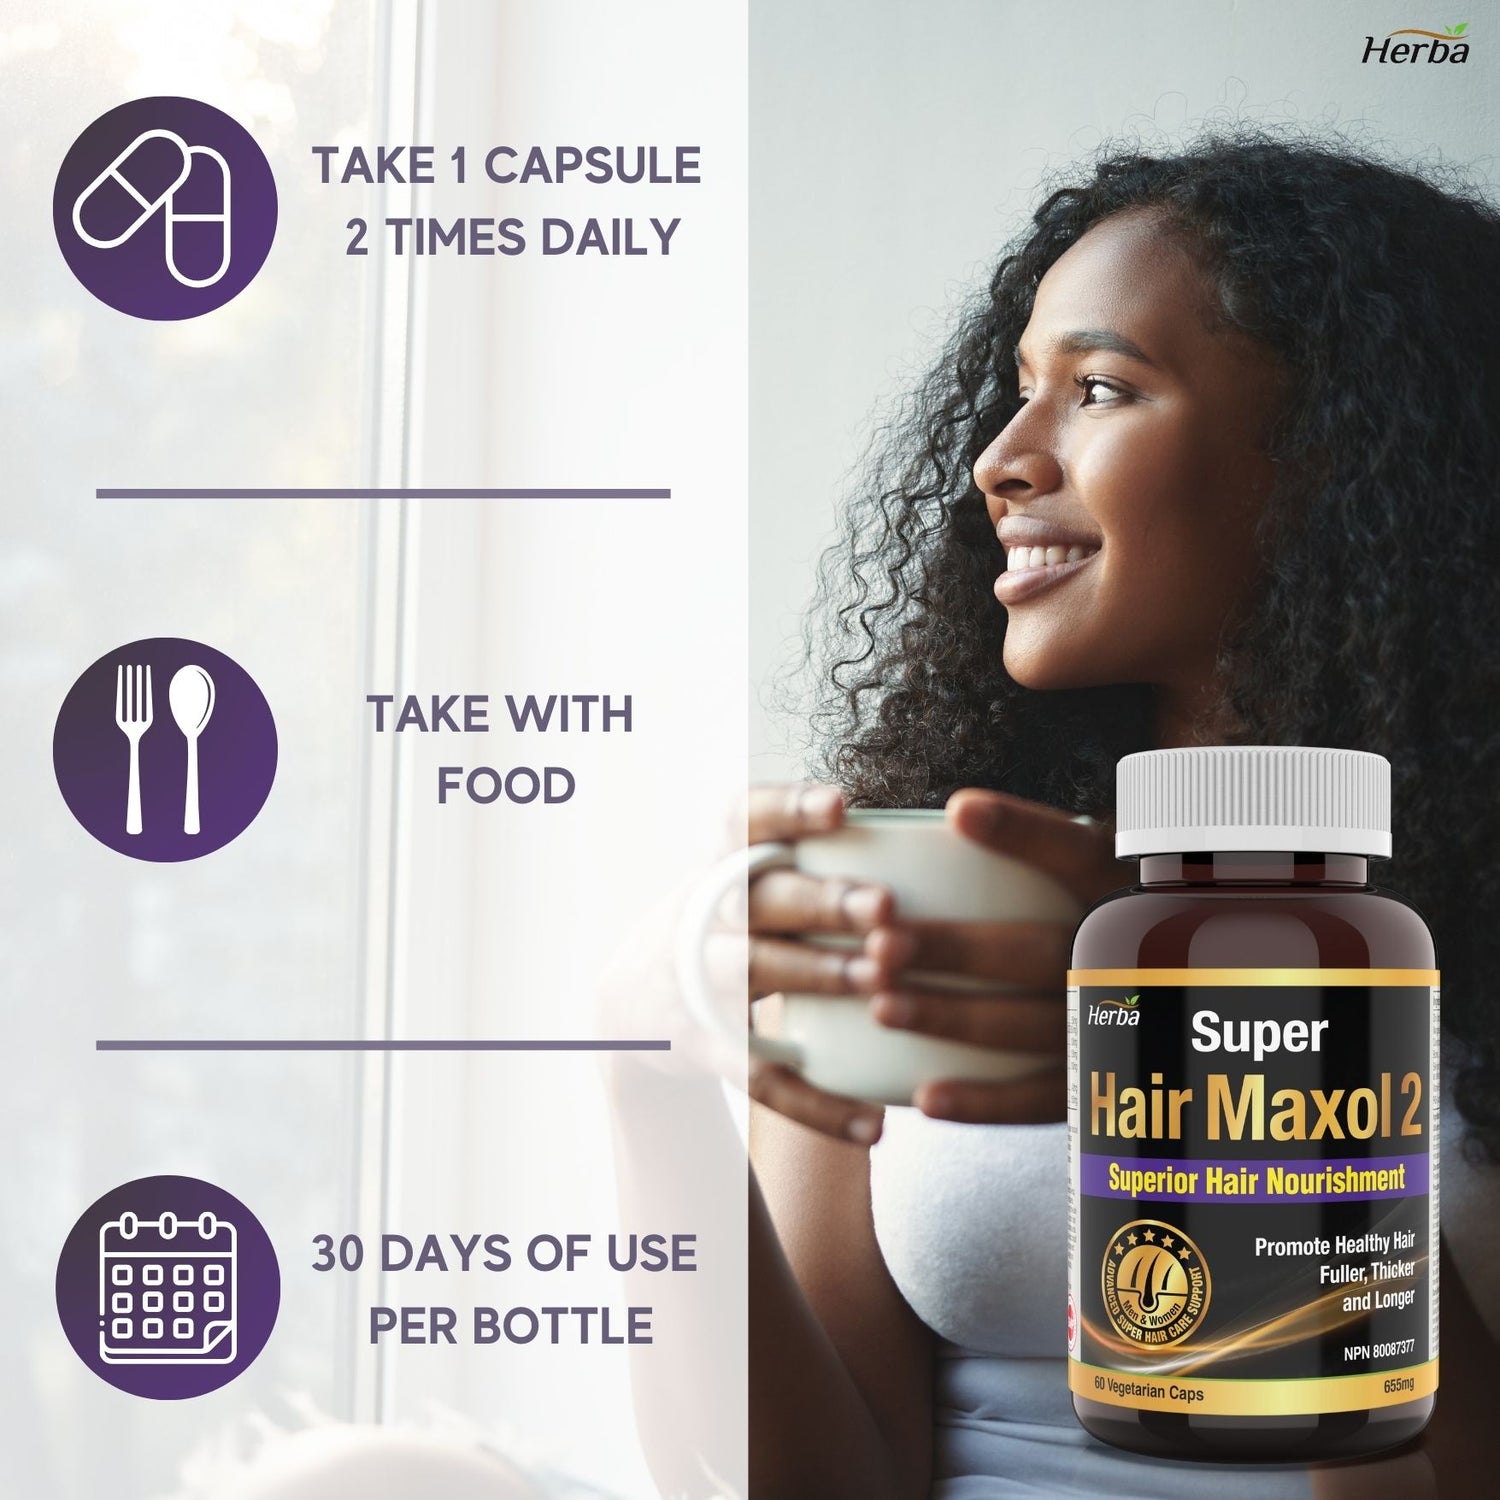 Hair Maxol 2 Hair Growth Vitamins with Biotin for Hair Growth for Men and Women